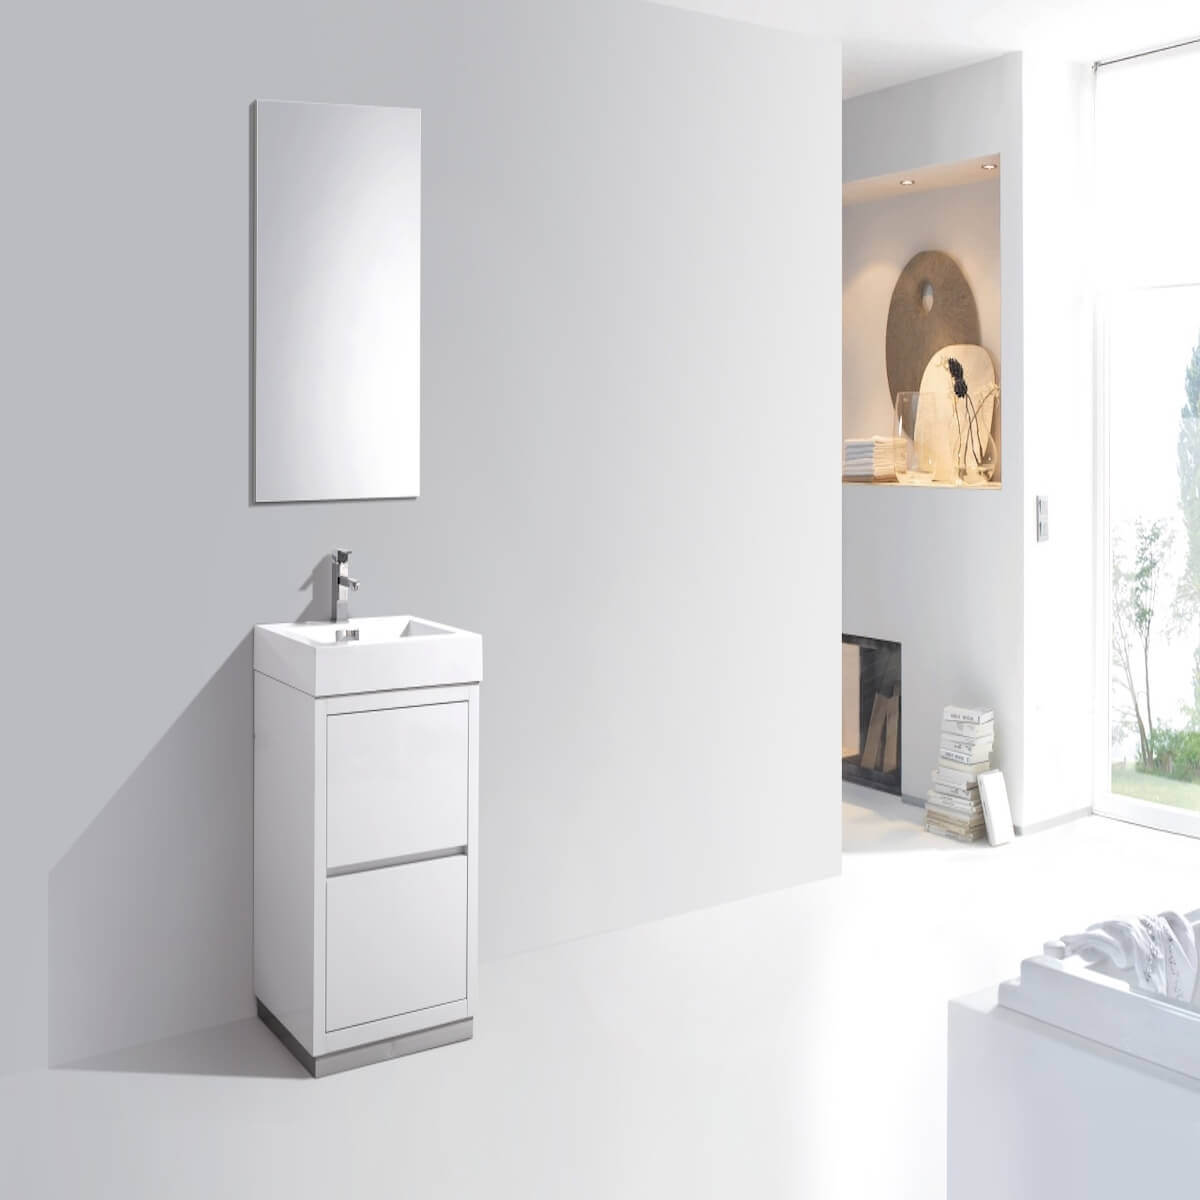 KubeBath Bliss 24" Gloss White Freestanding Single Vanity FMB24GW in Bathroom #finish_gloss white